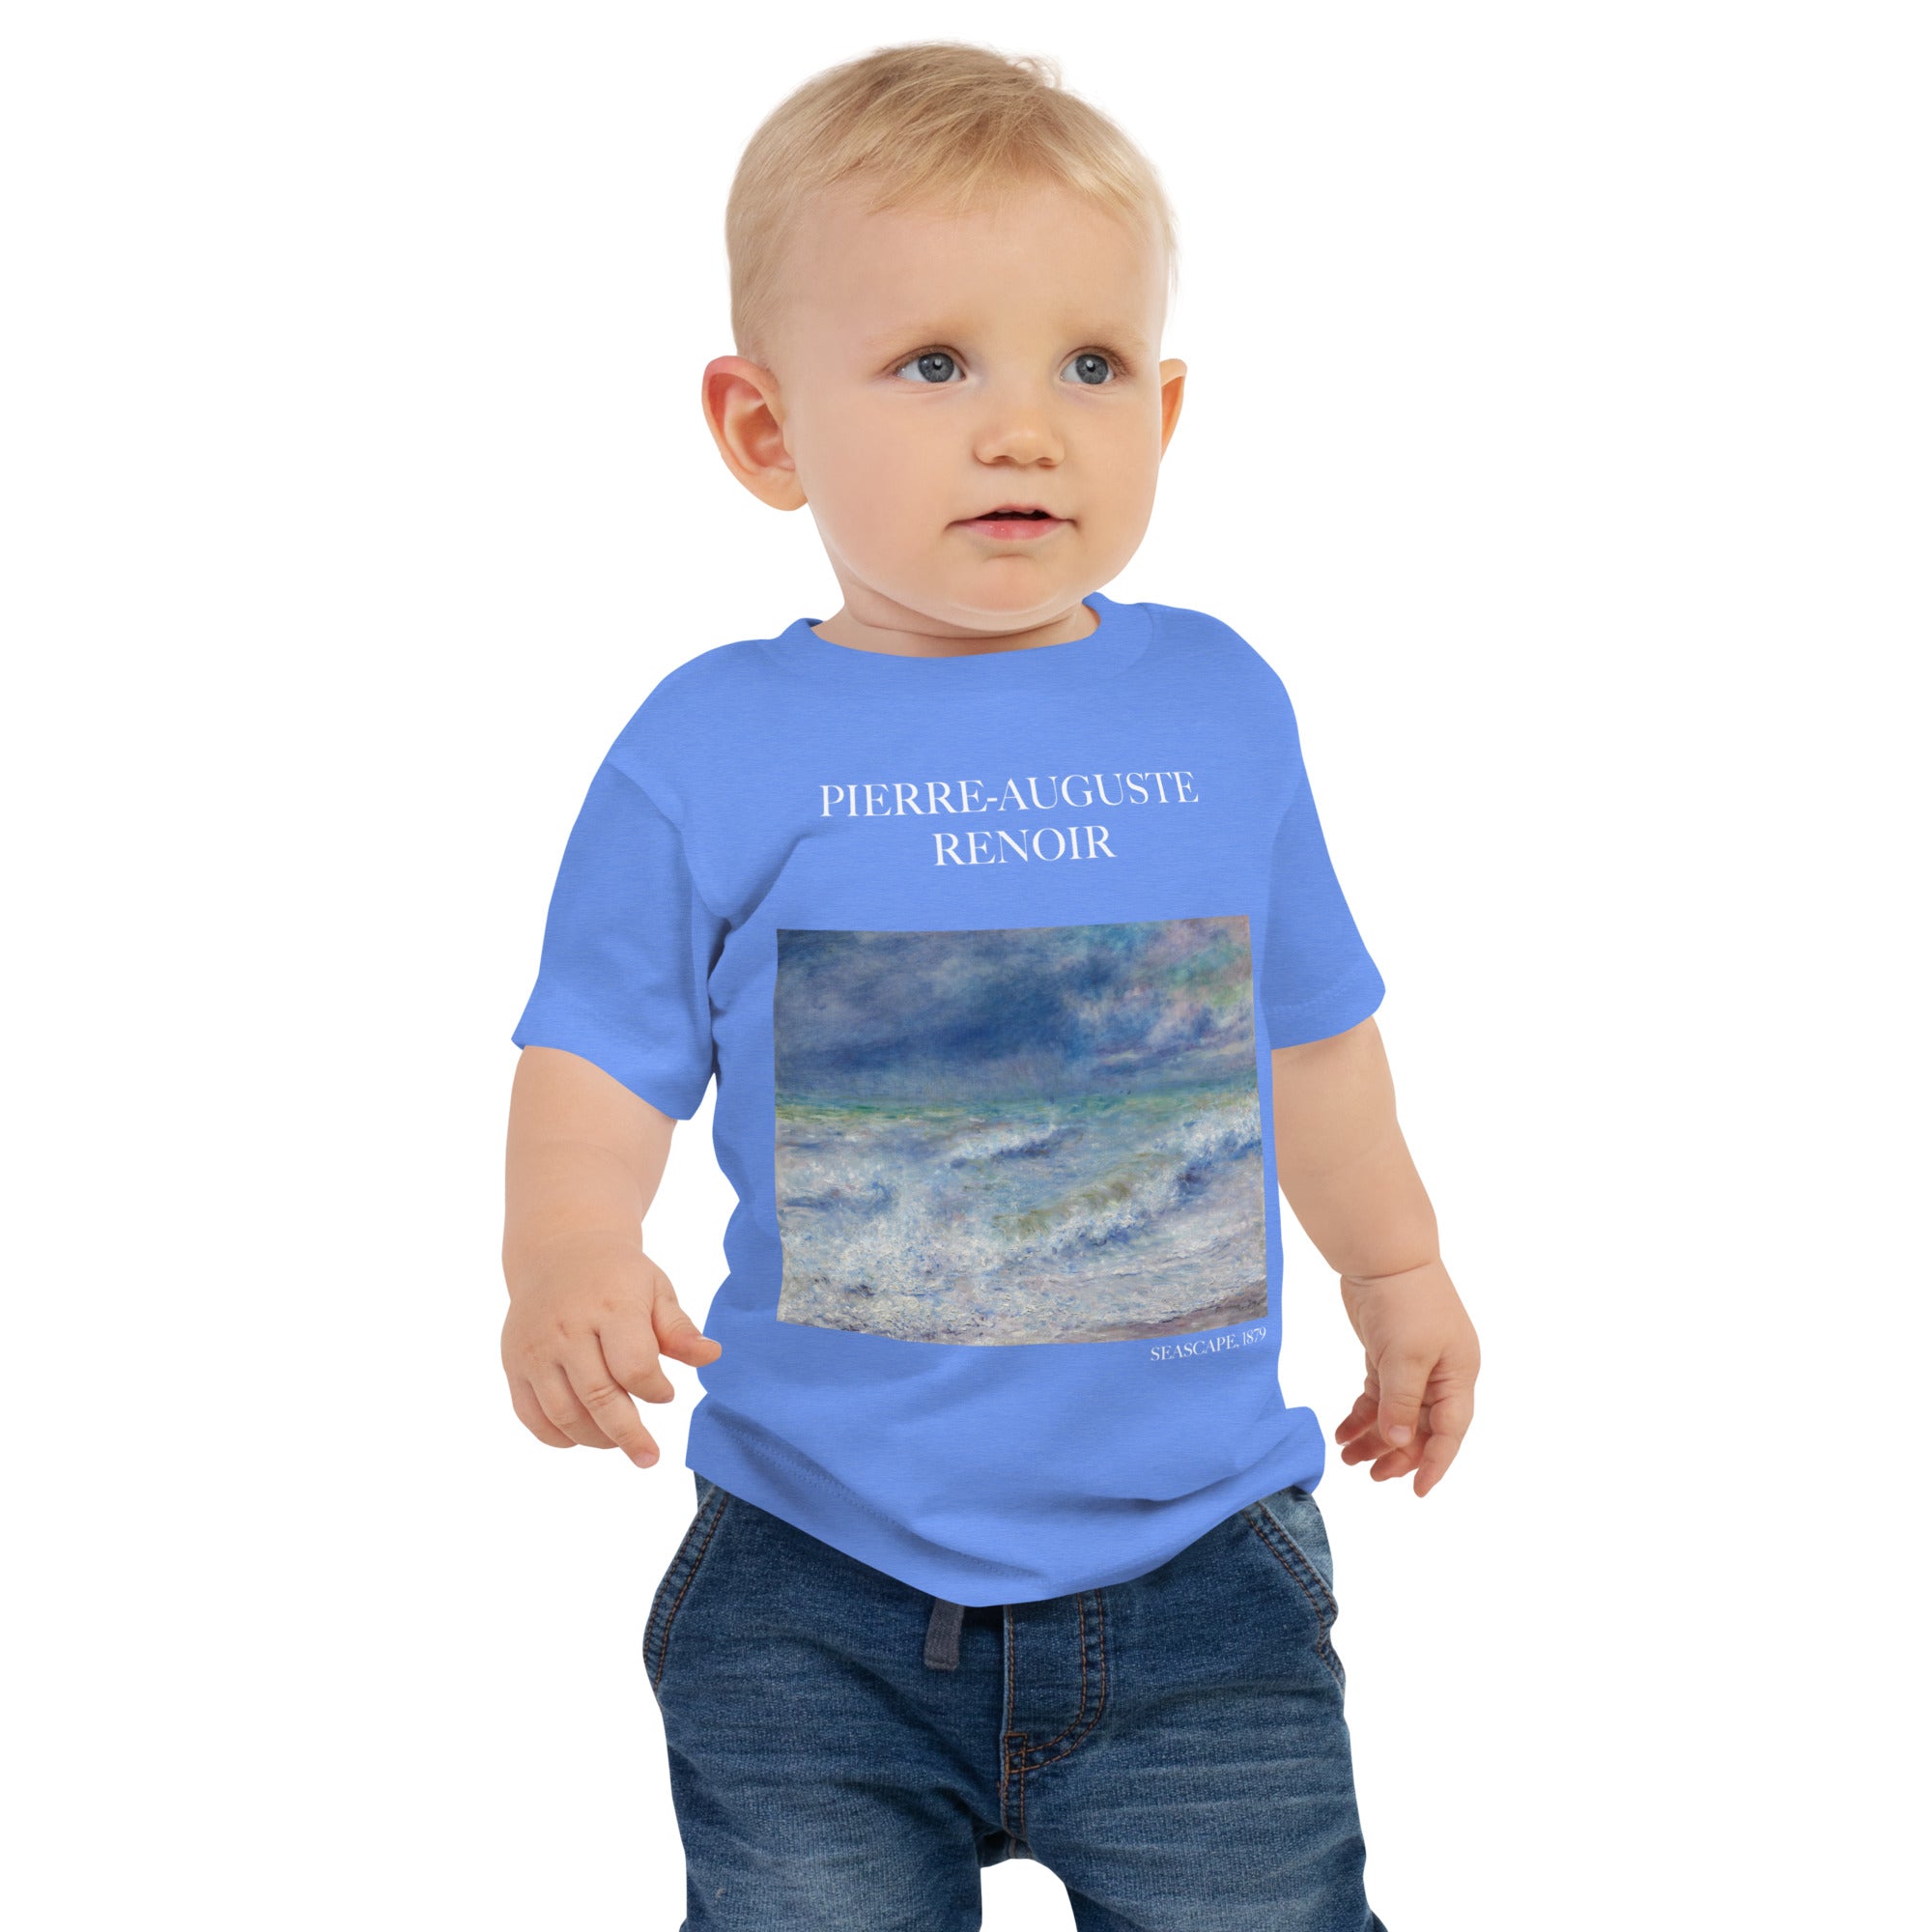 Pierre-Auguste Renoir 'Seascape' Famous Painting Baby Staple T-Shirt | Premium Baby Art Tee